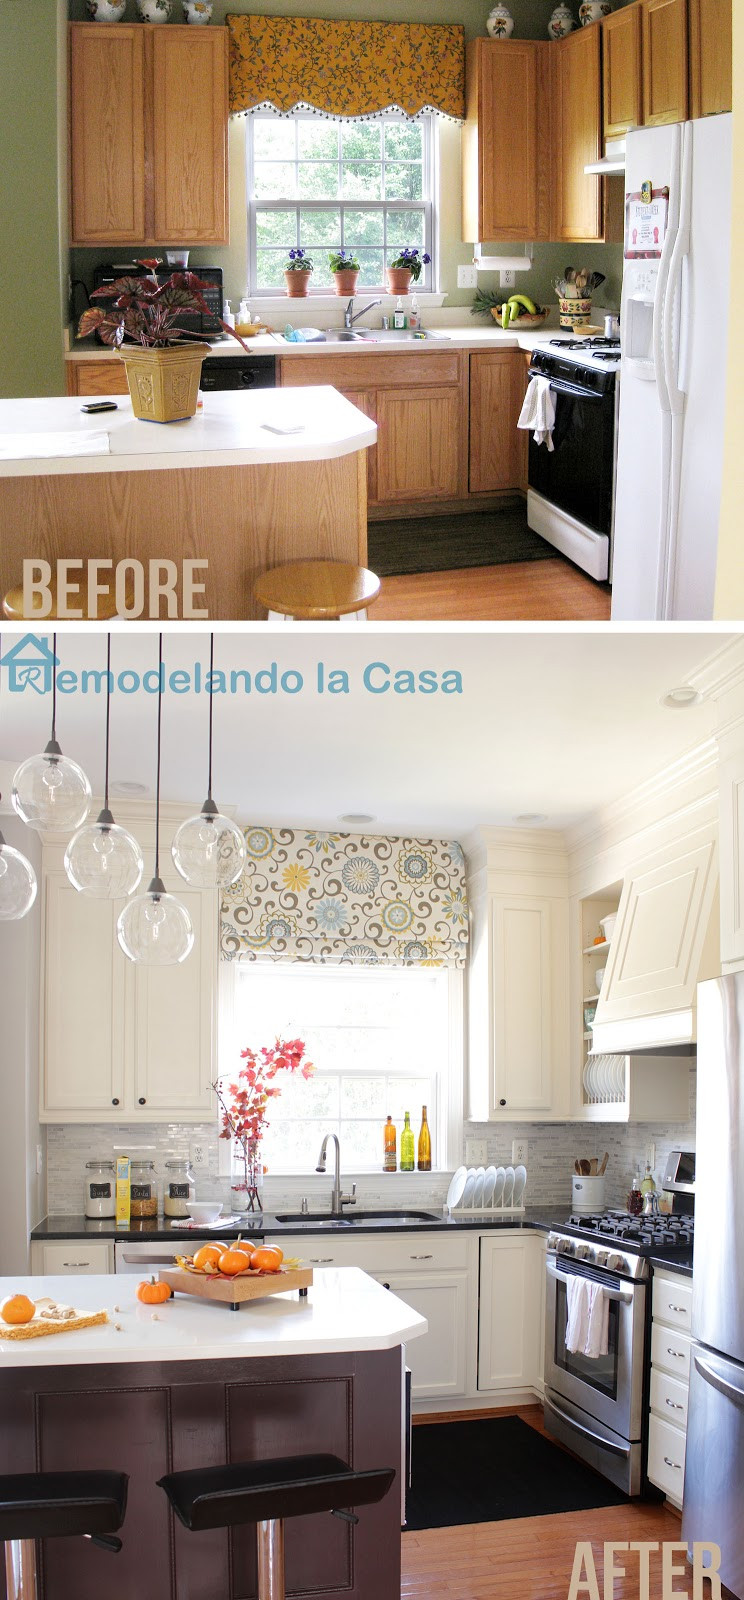 Best ideas about DIY Kitchen On A Budget
. Save or Pin Kitchen Makeover Remodelando la Casa Now.